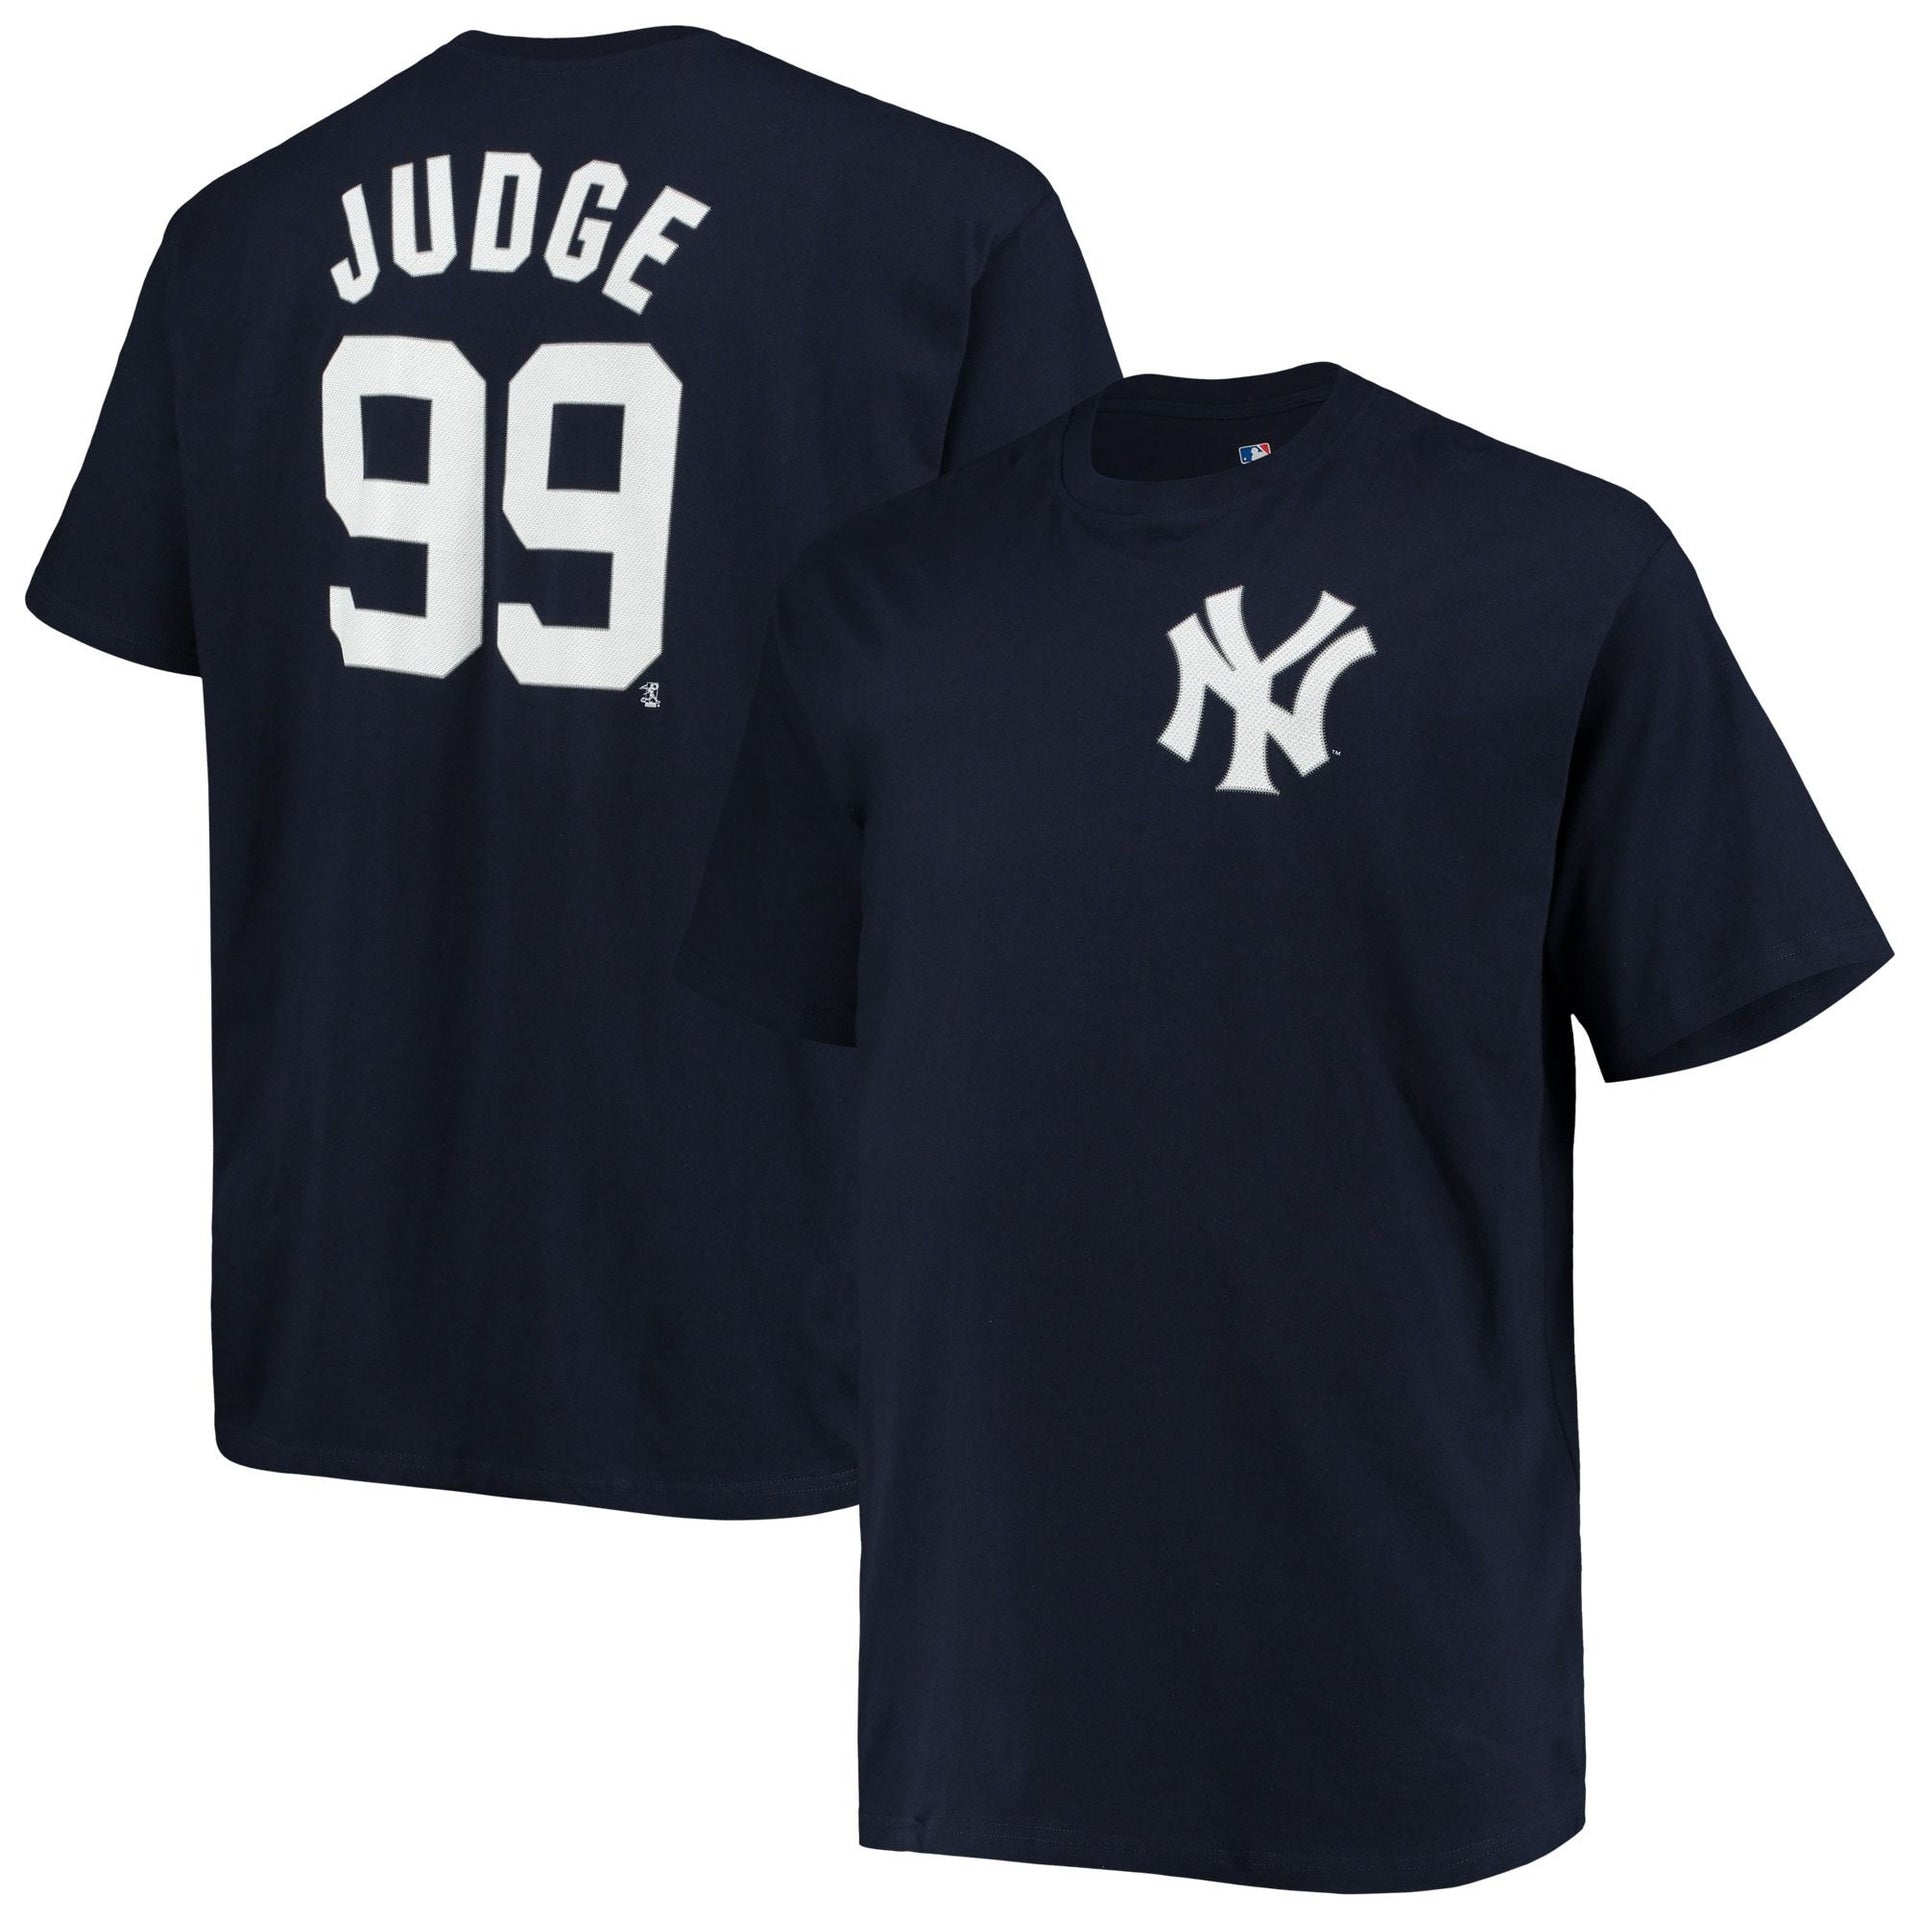 Official Aaron Judge Yankees Jersey, Aaron Judge Shirts, Baseball